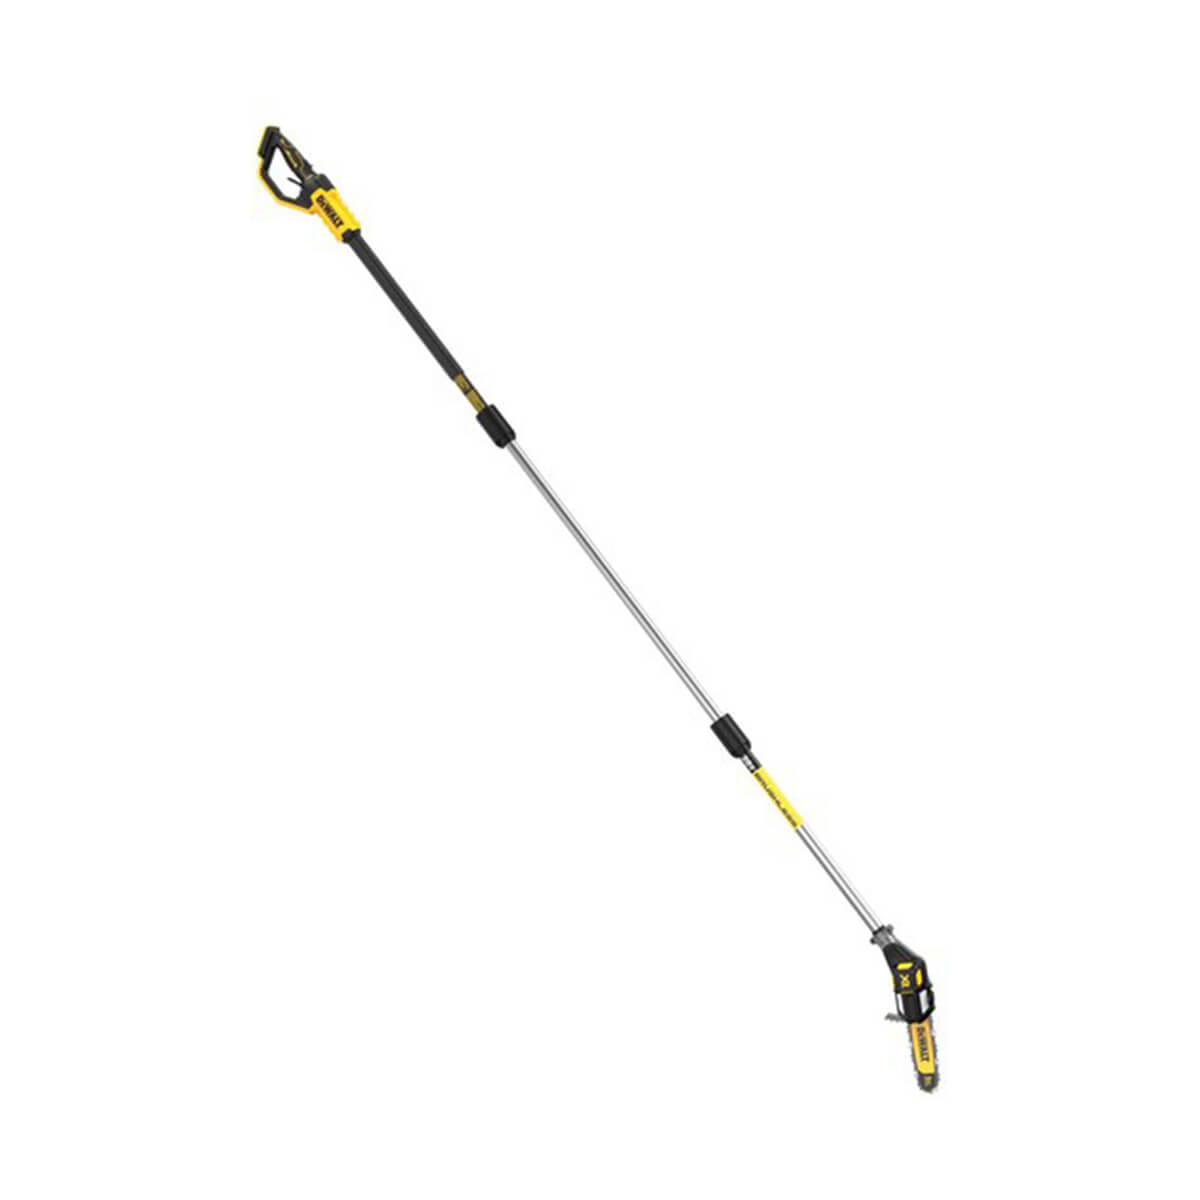 MAX* XR® Brushless Cordless Pole Saw 20V (Bare Tool)